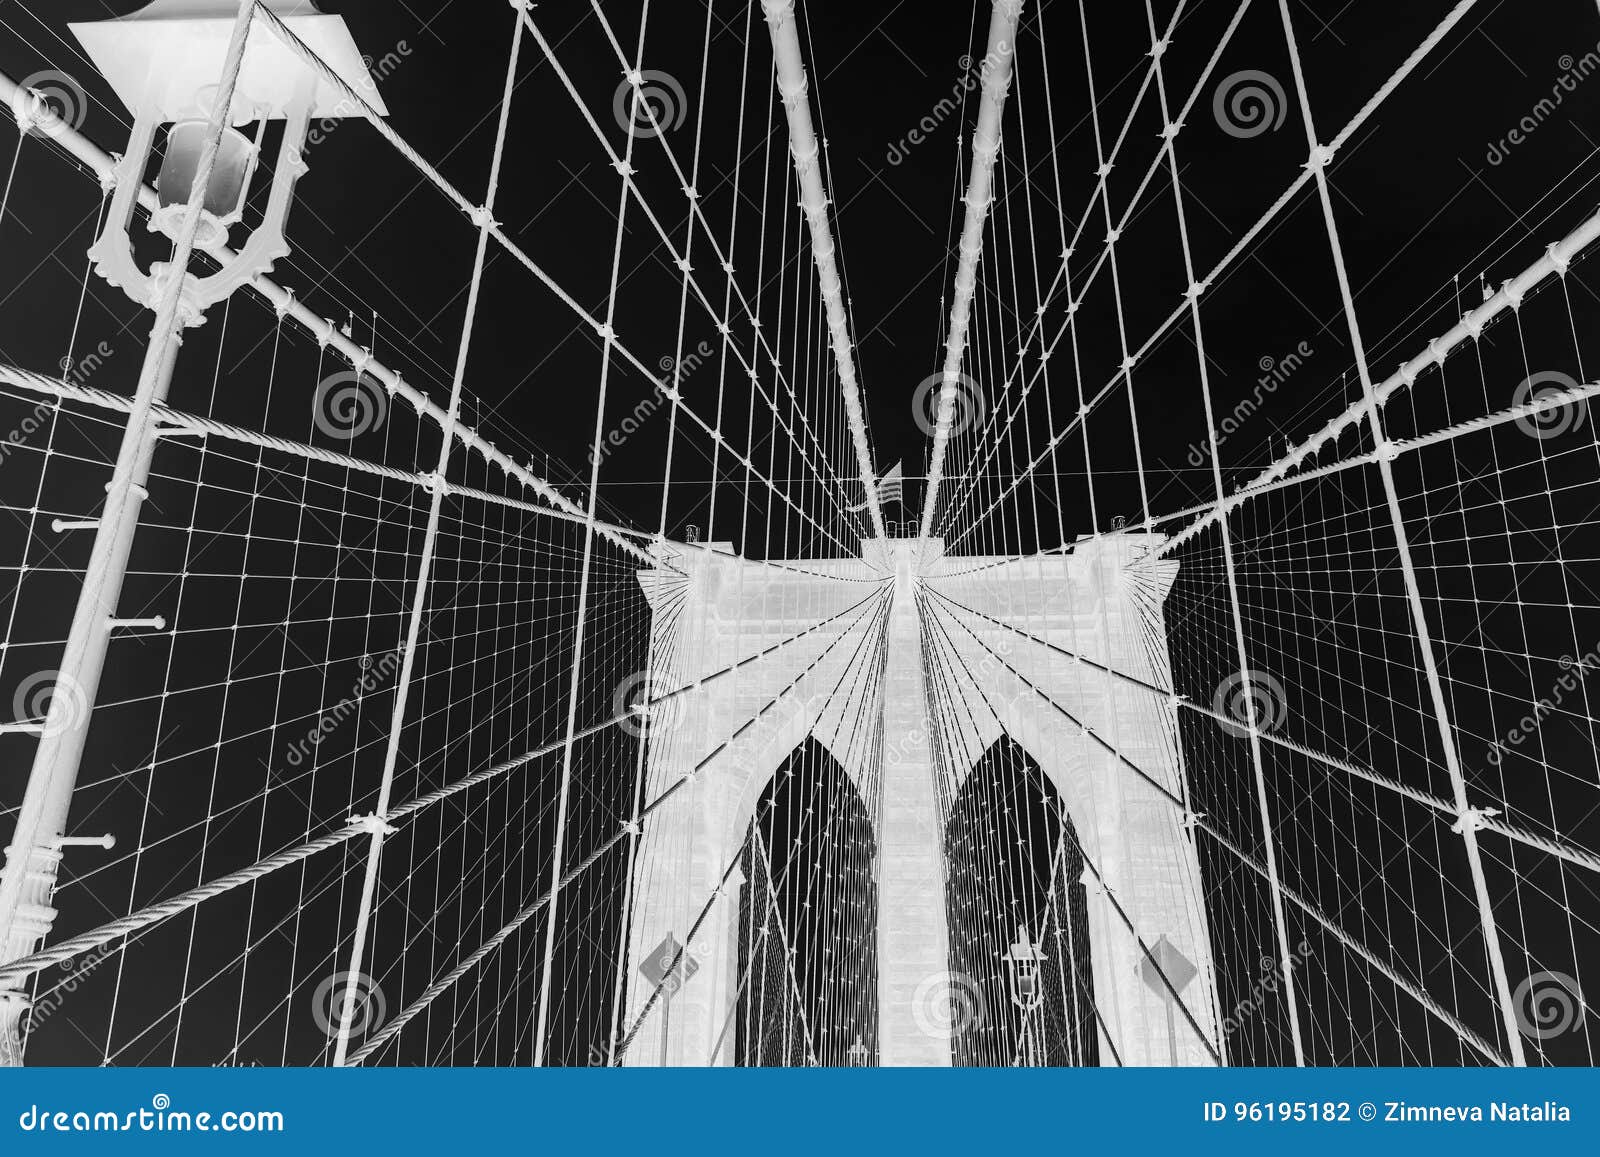 brooklyn bridge, black and white invert photo, new york city, usa